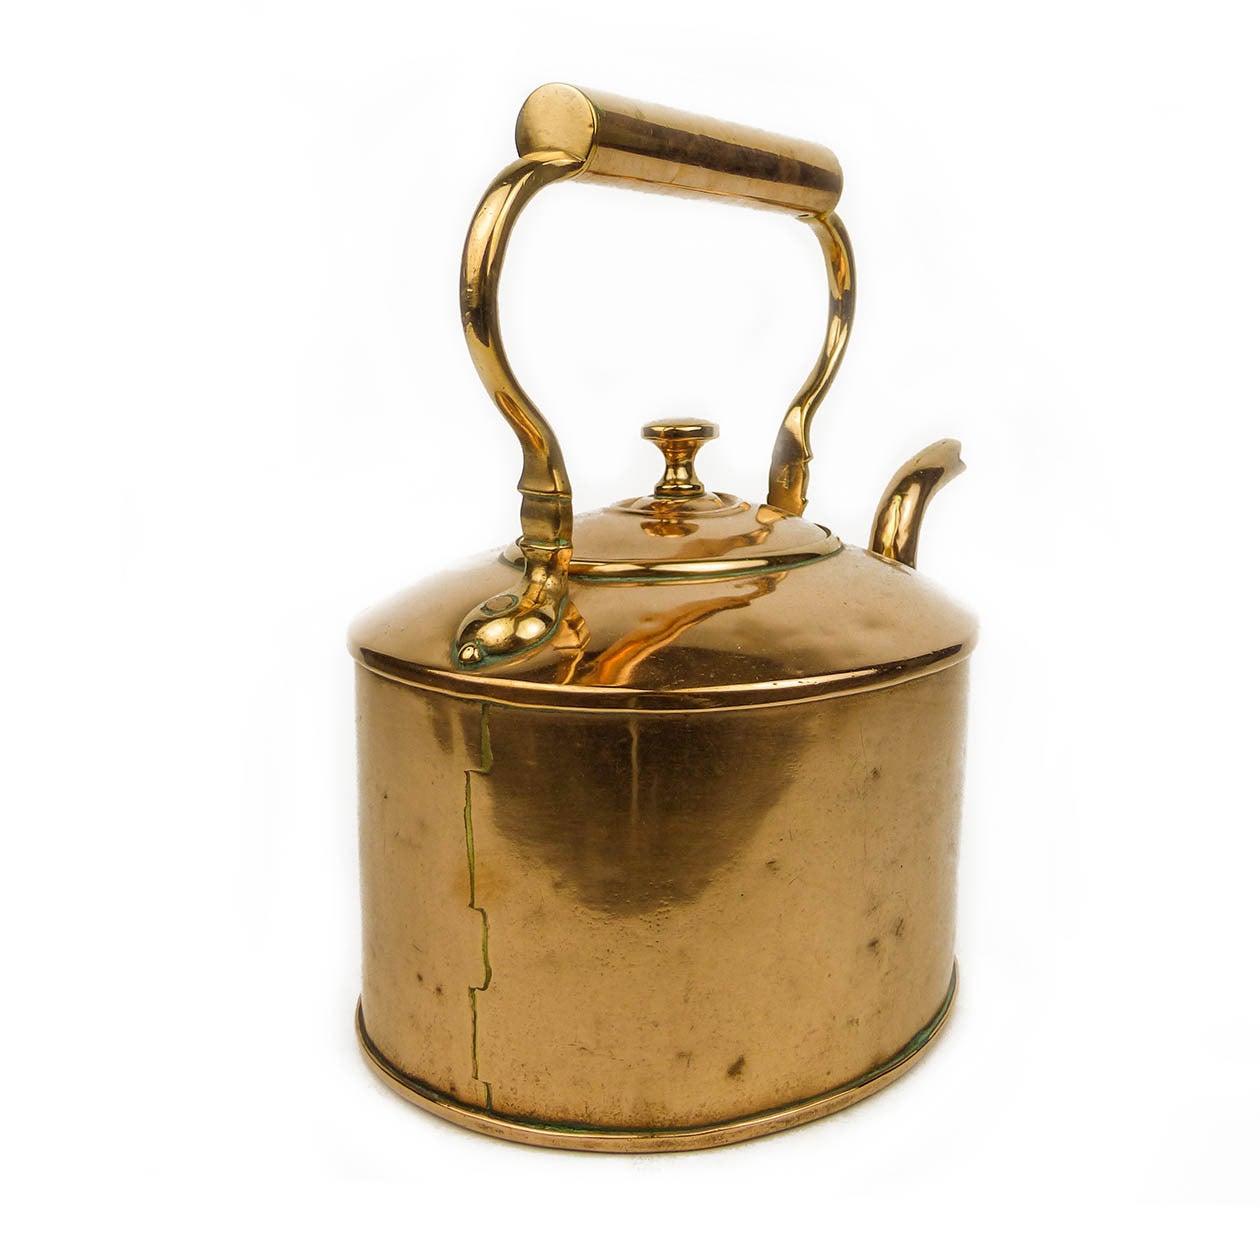 Large oval English copper tea kettle, circa 1840.

Dovetailed.